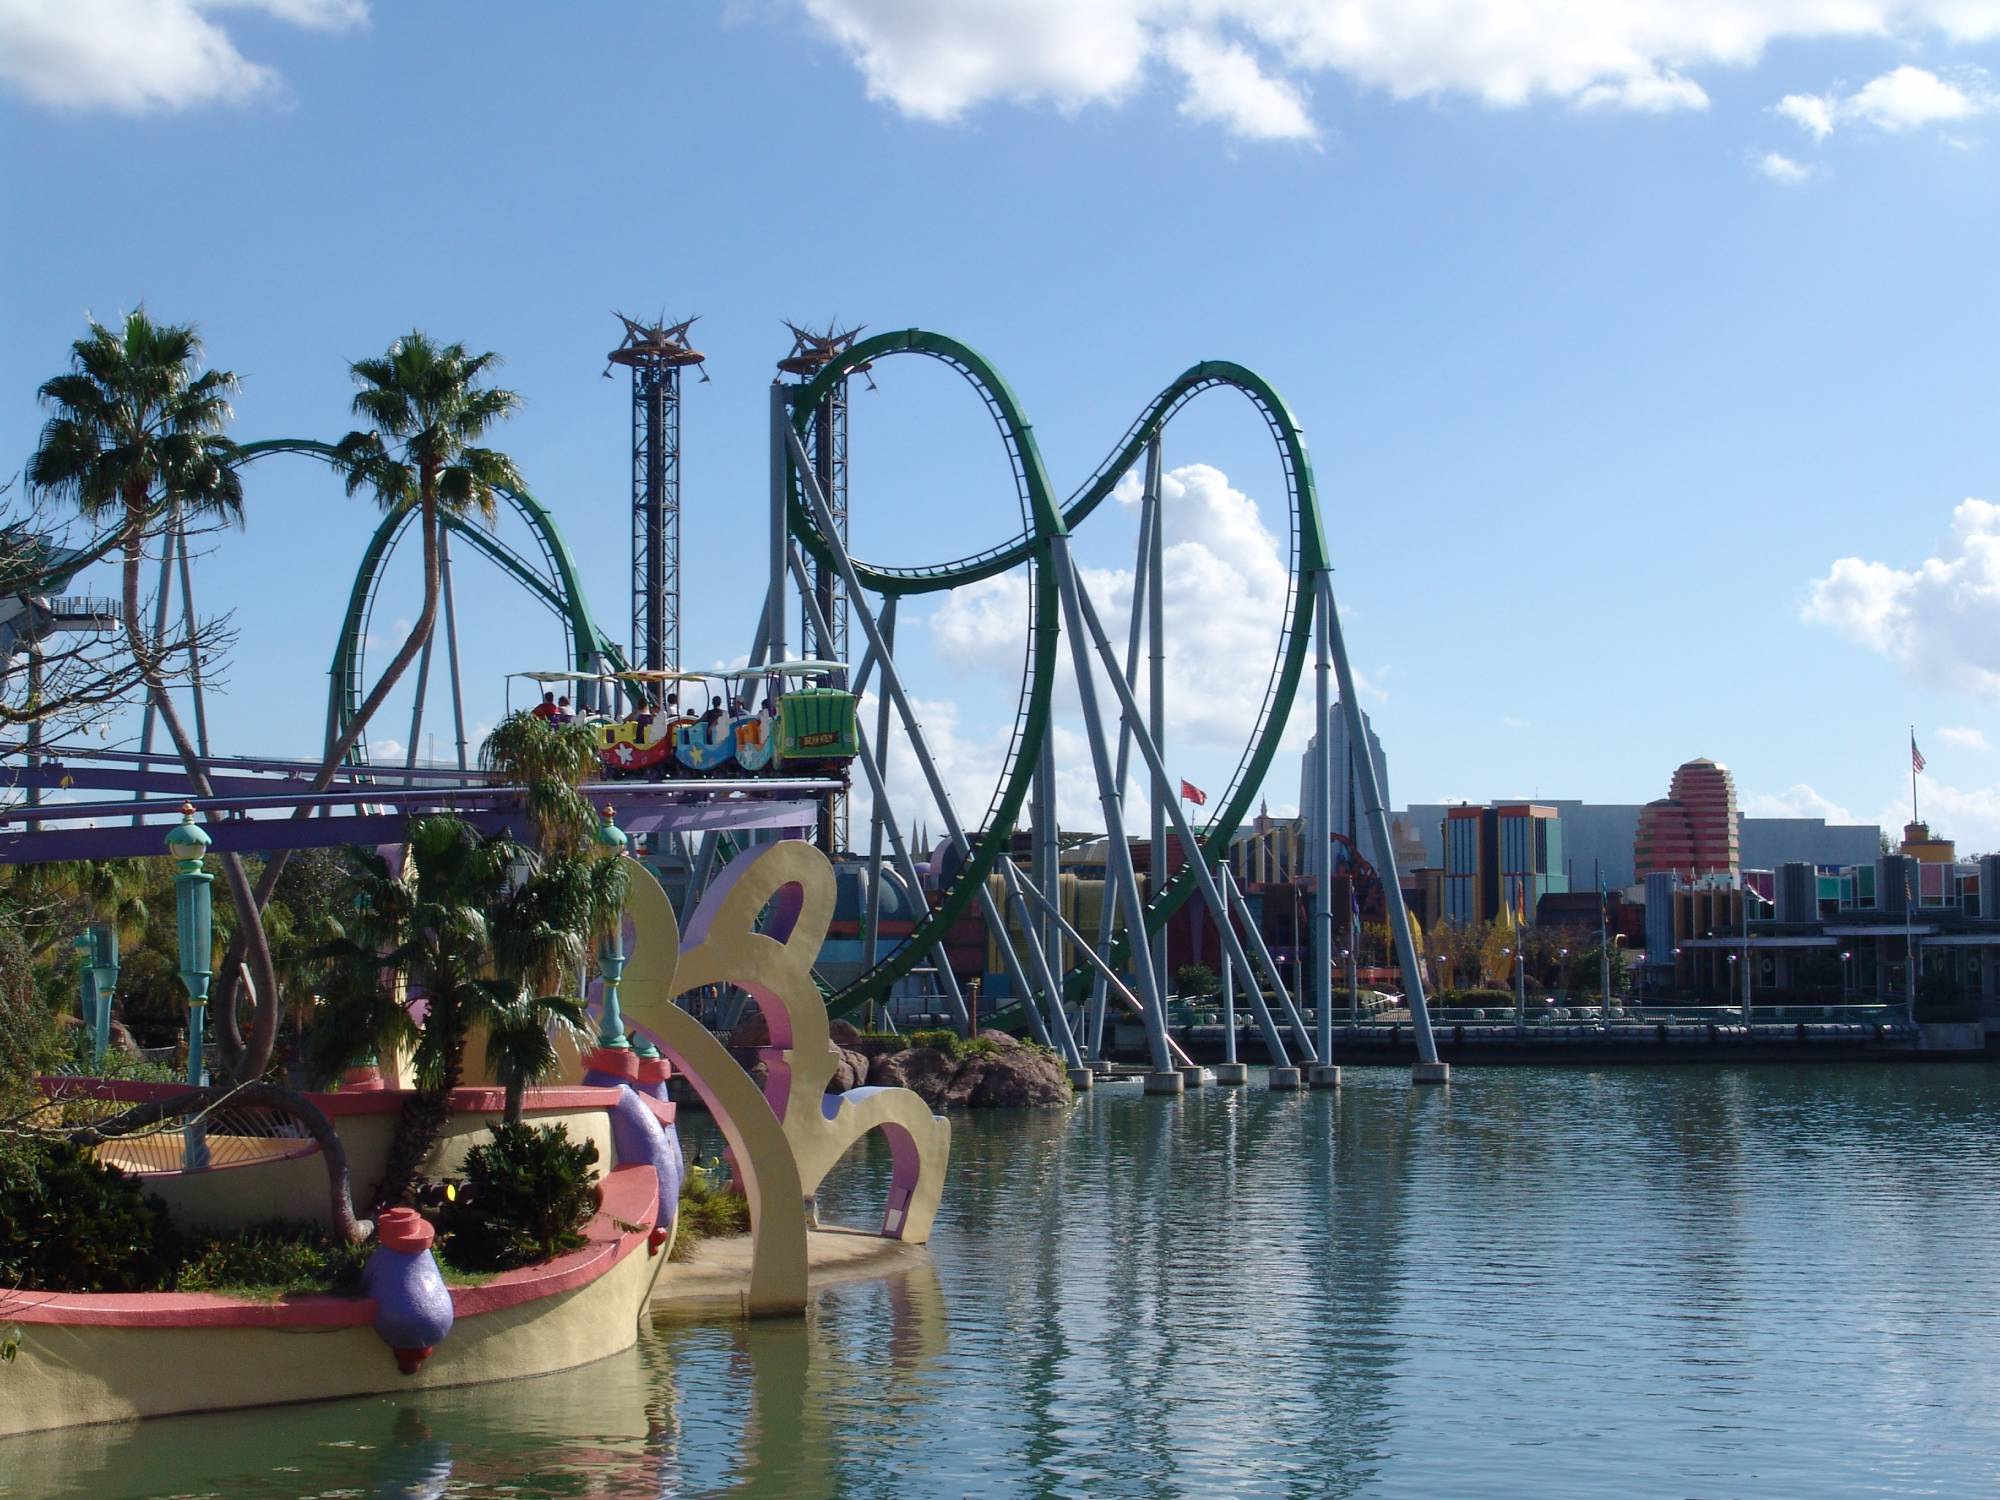 Islands of Adventure - Seuss Landing and Incredible Hulk Coaster